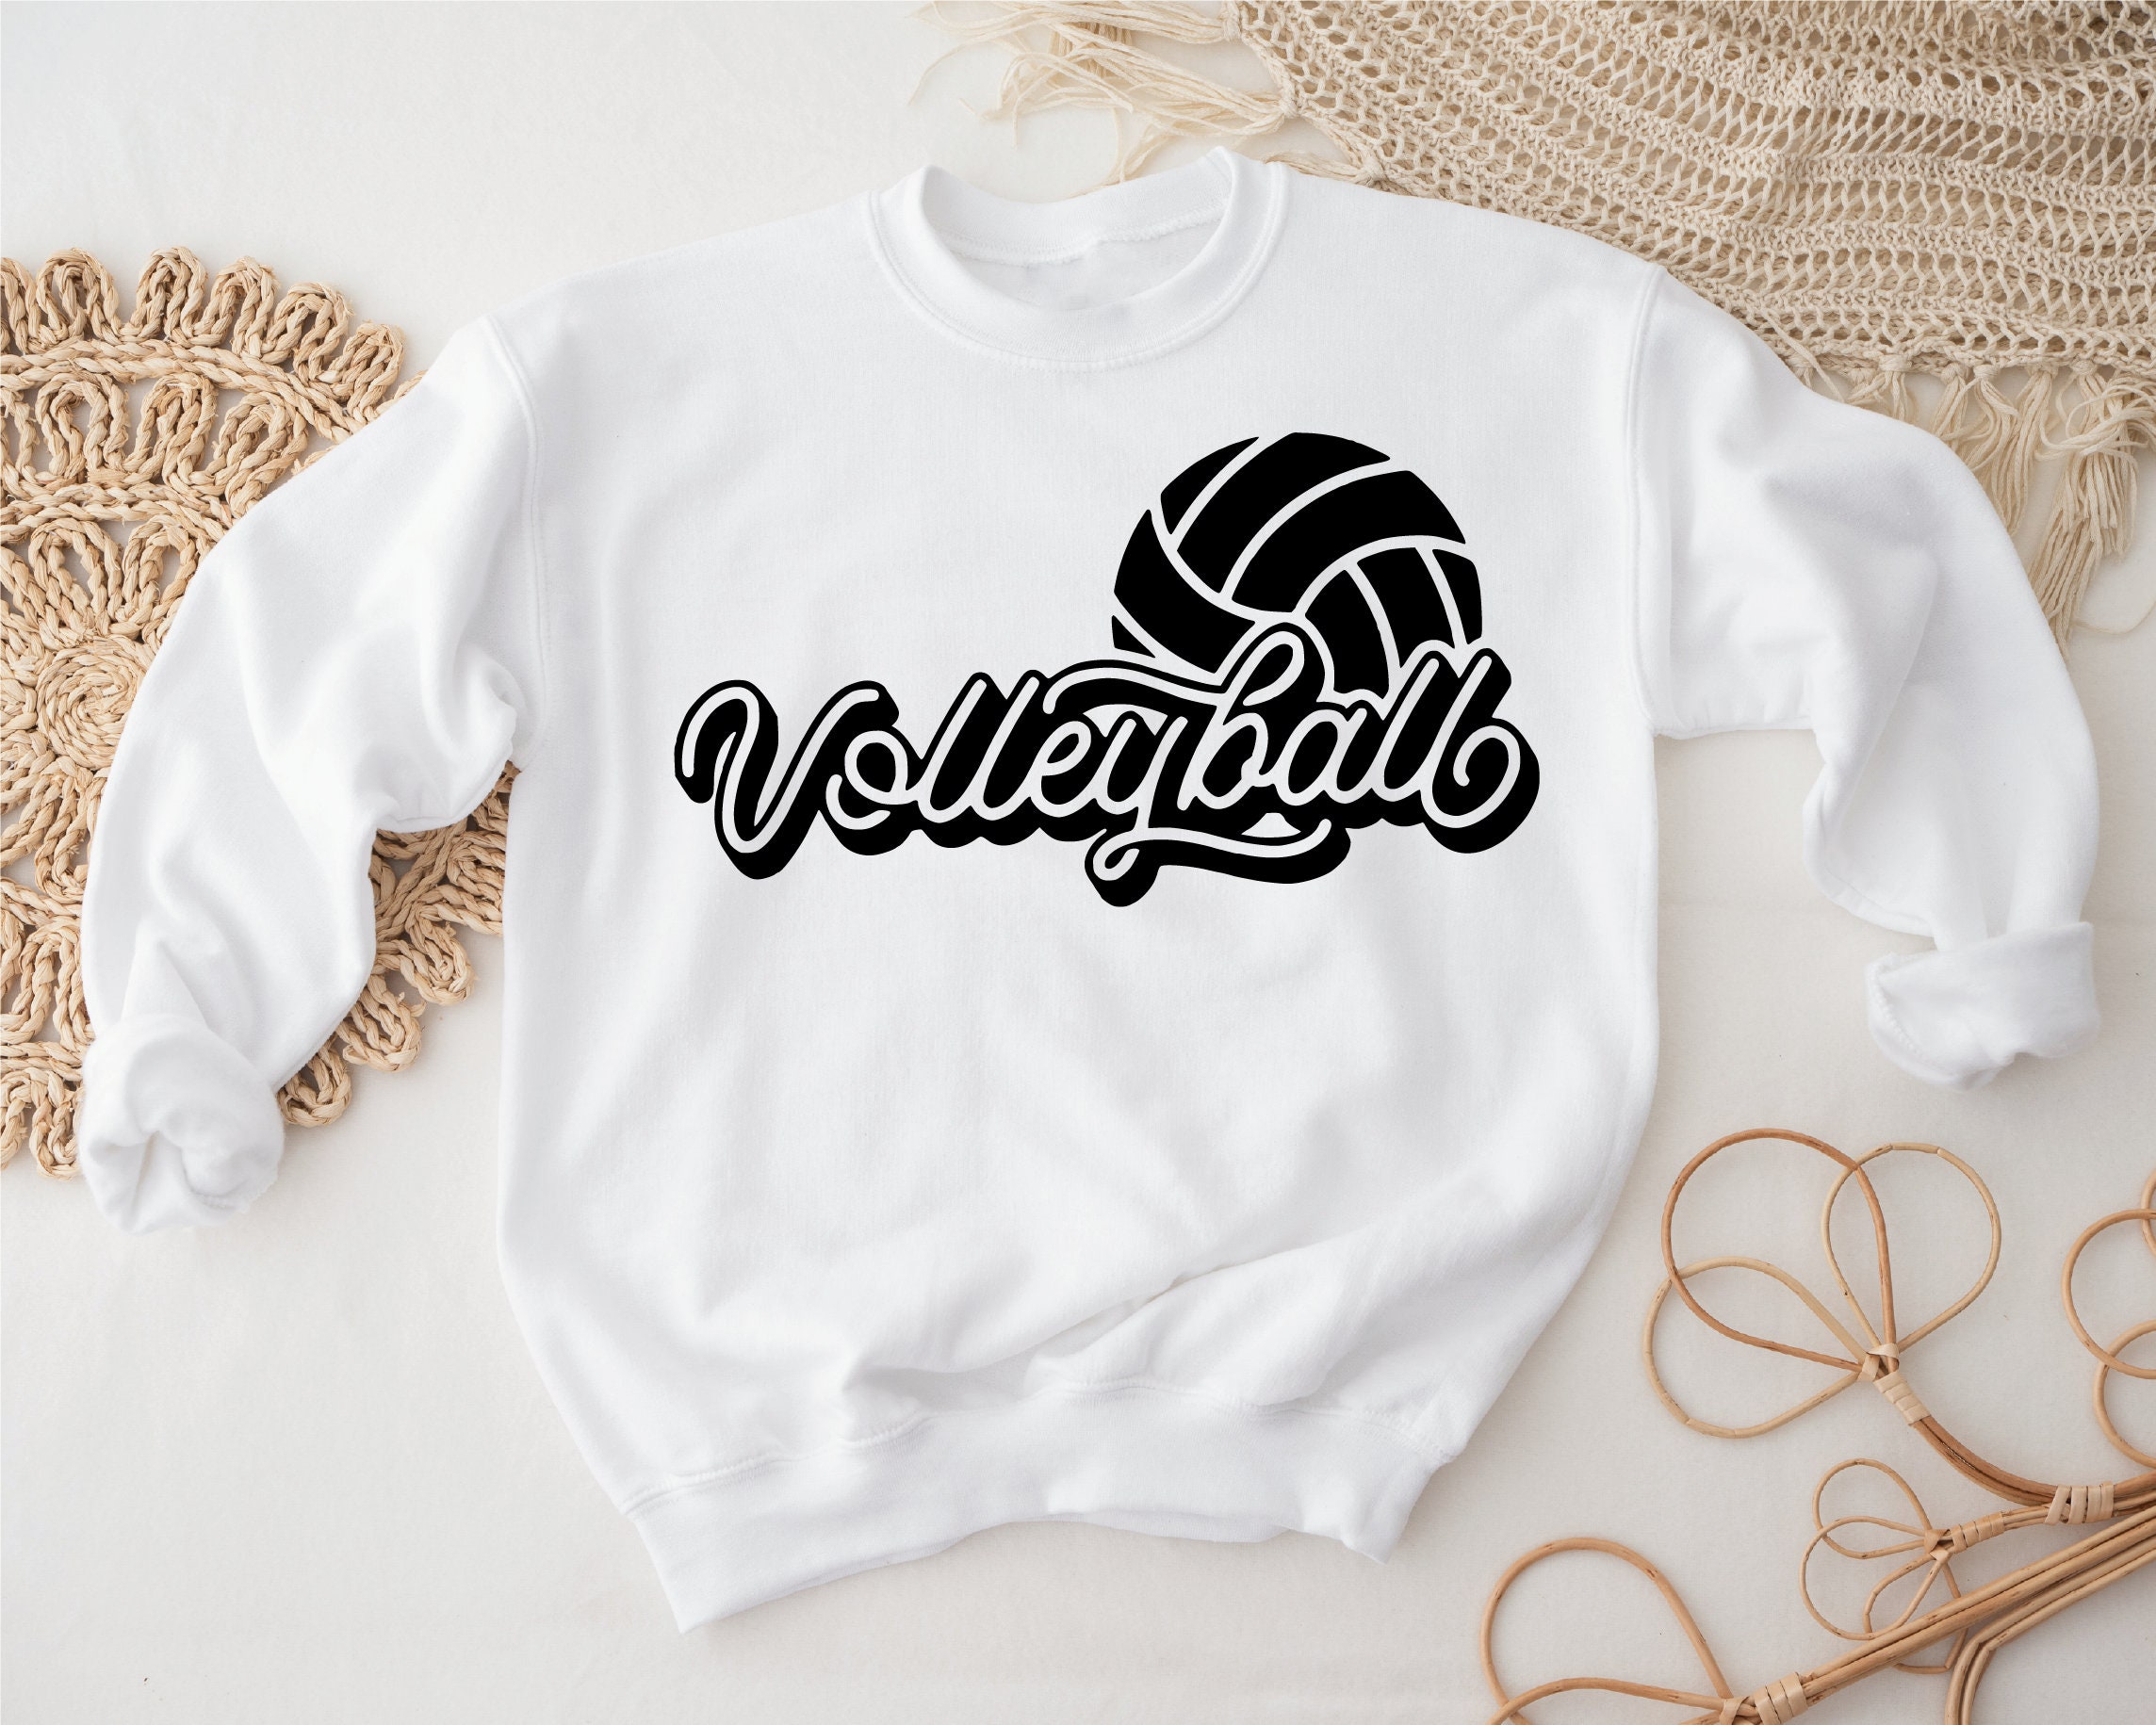 Volleyball Team Sweatshirt Volleyball Sweater Volleyball Mom - Etsy